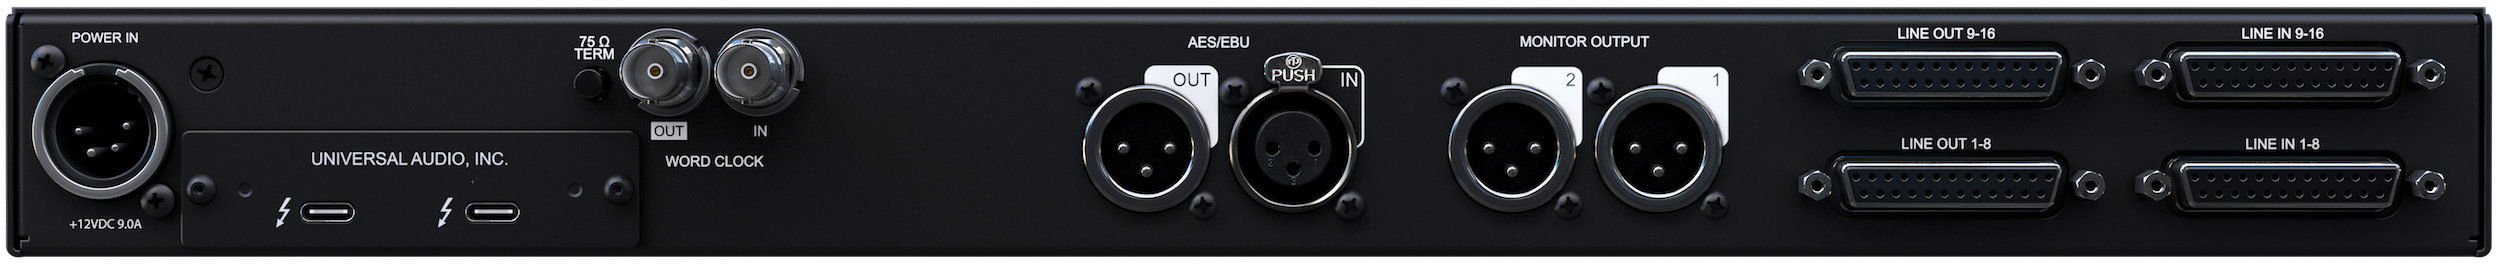 Universal Audio Apollo X16 - Thunderbolt audio-interface - Variation 2